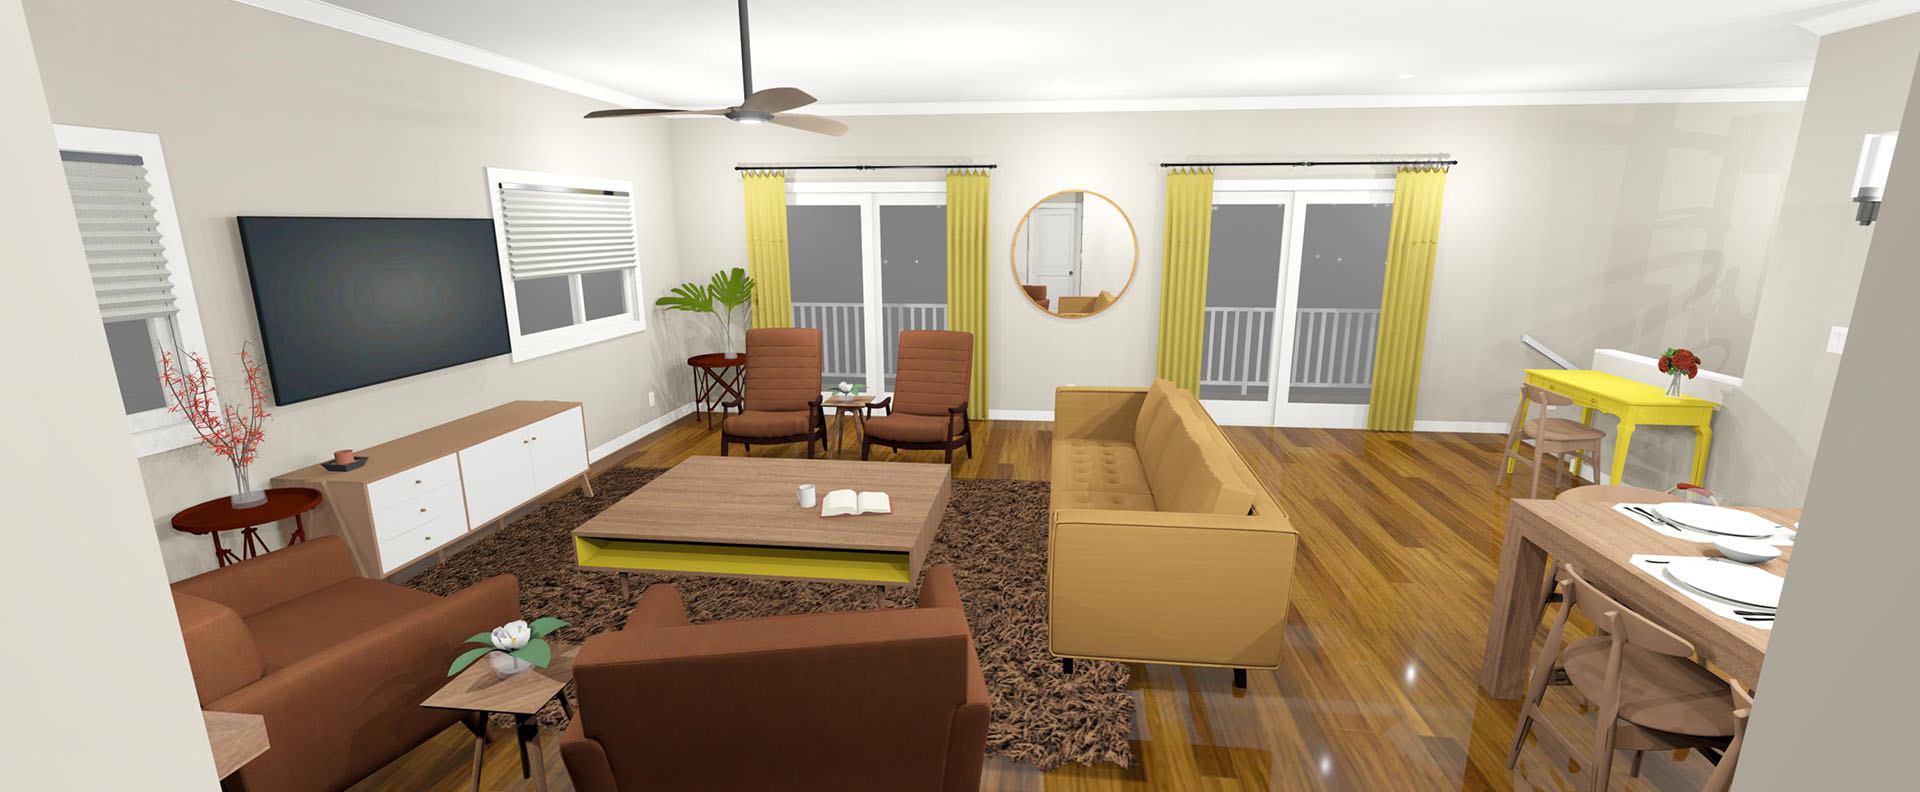 Nohona interior living room